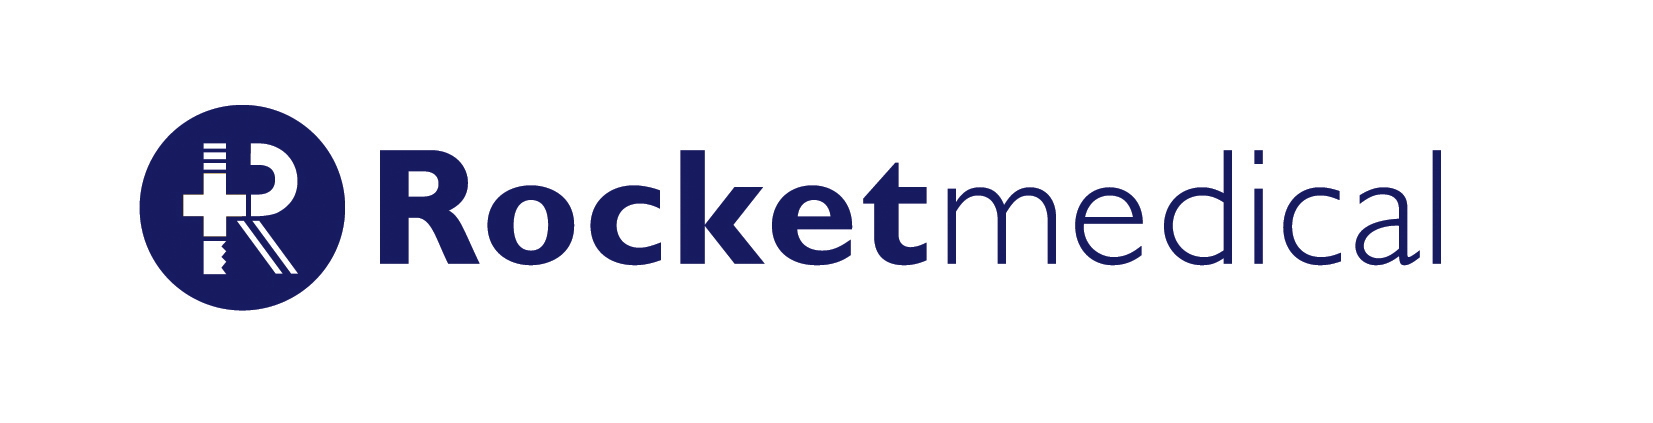 Rocket Medical logo